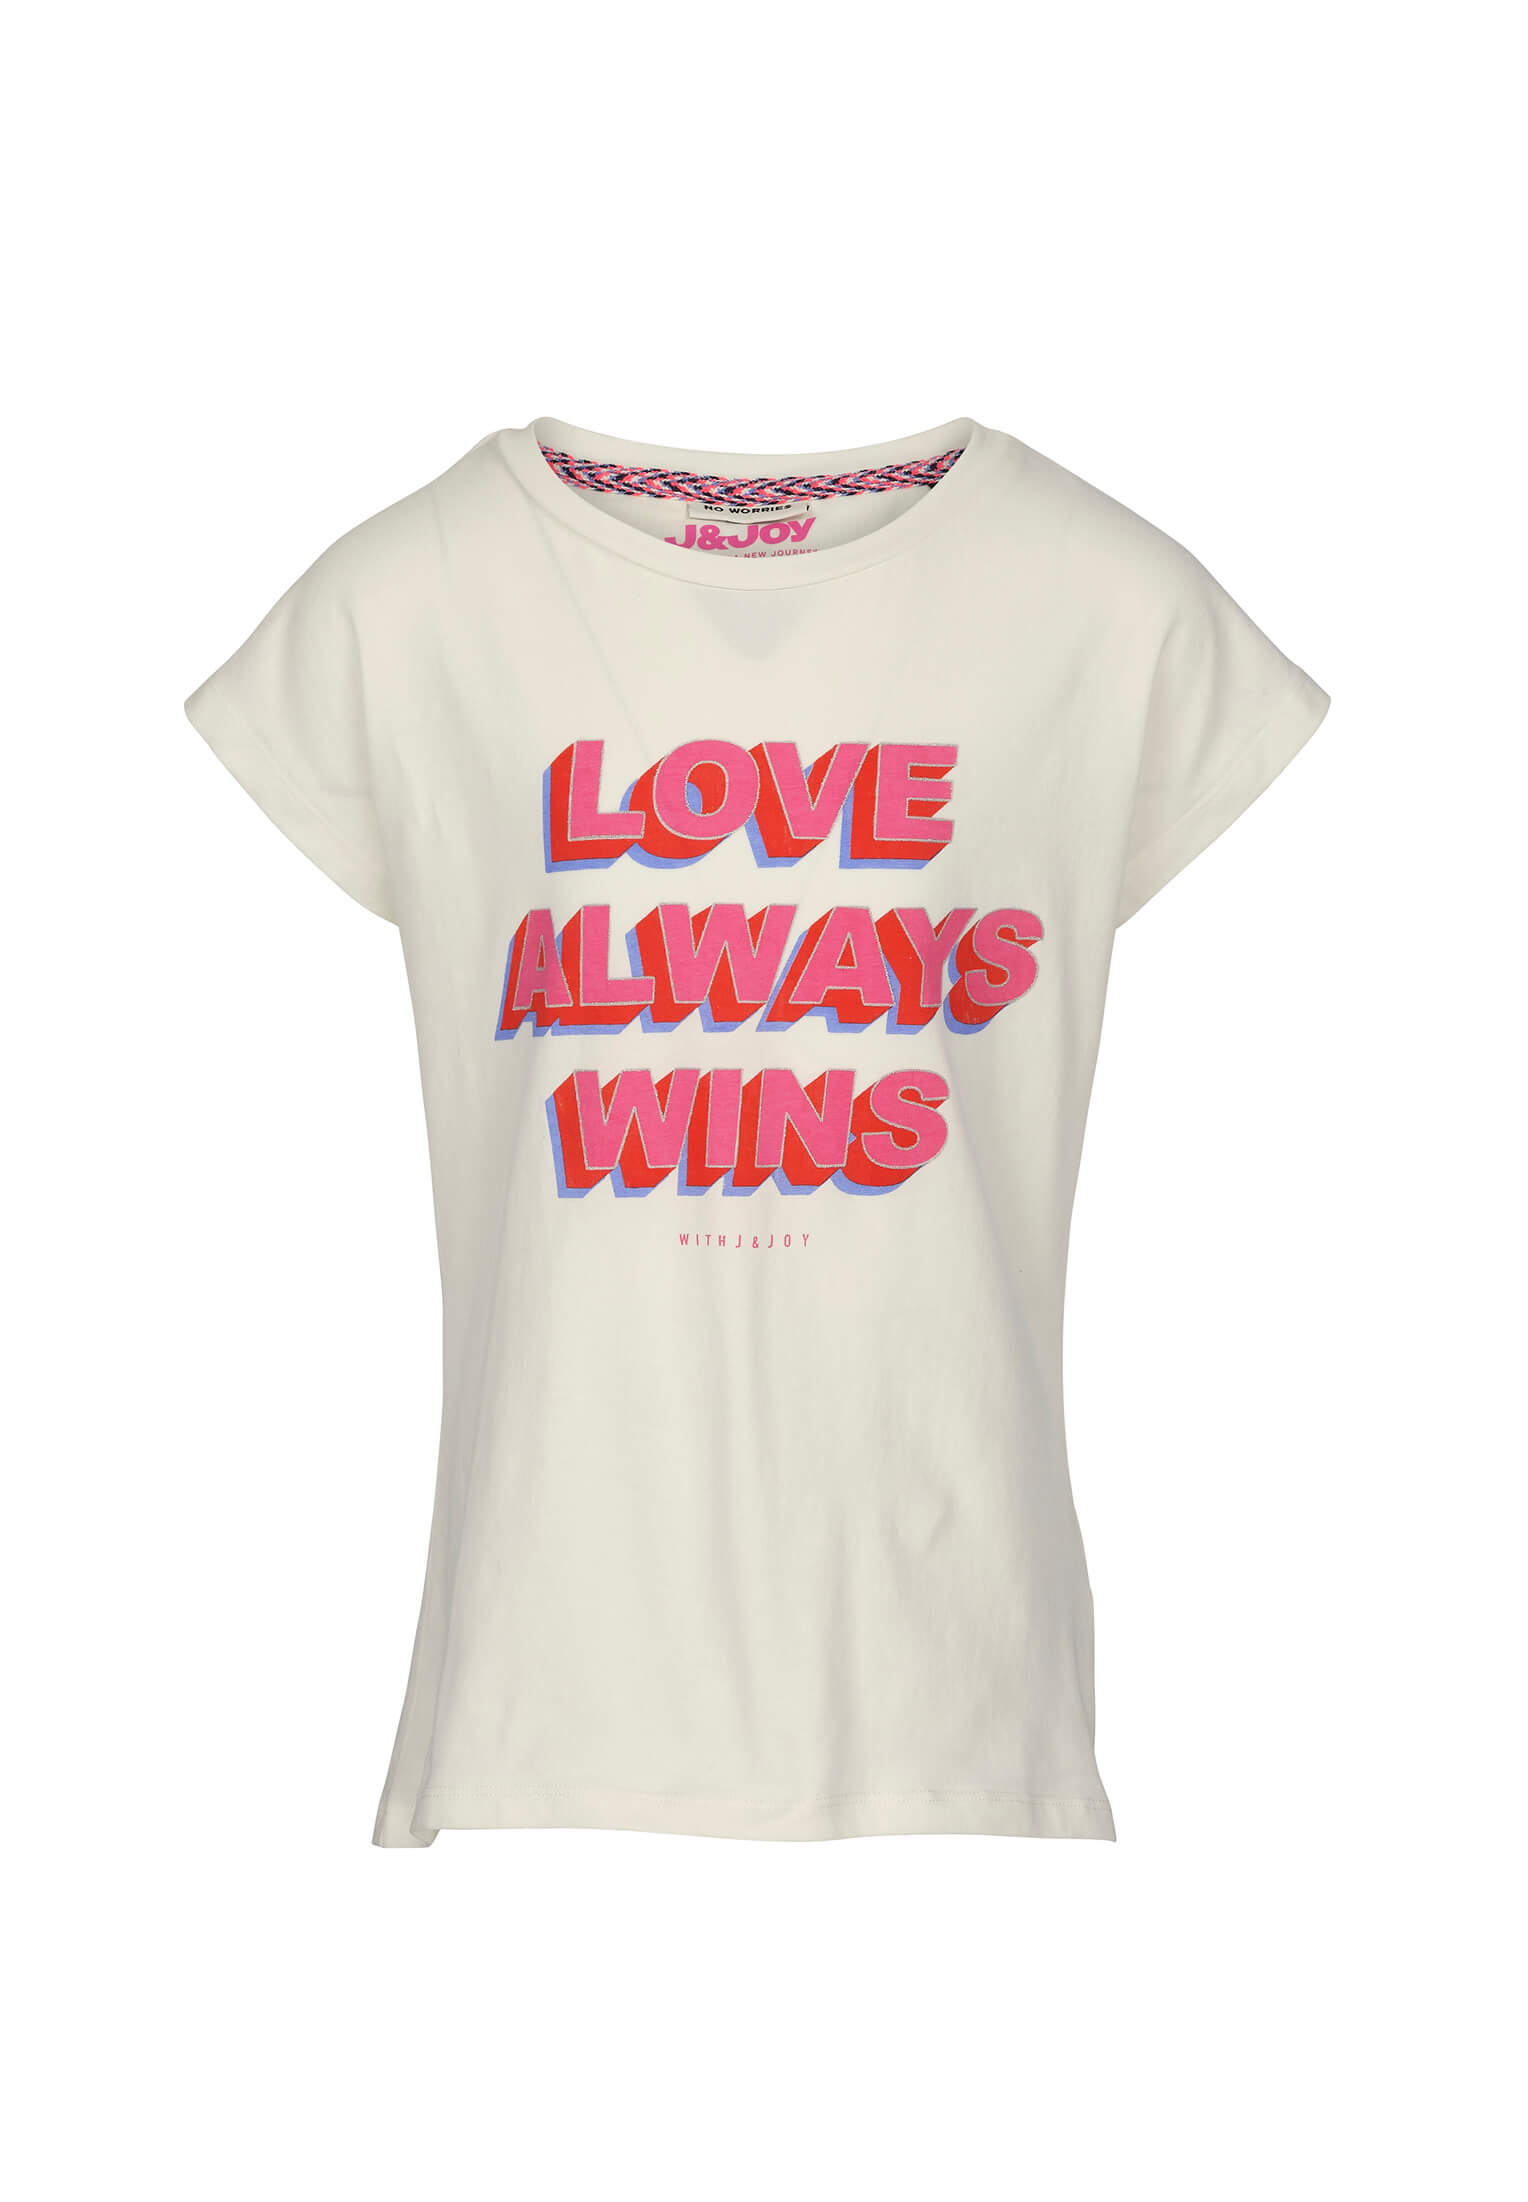 T-Shirt Fille 03 Sydney White Love Always Wins | J&JOY.